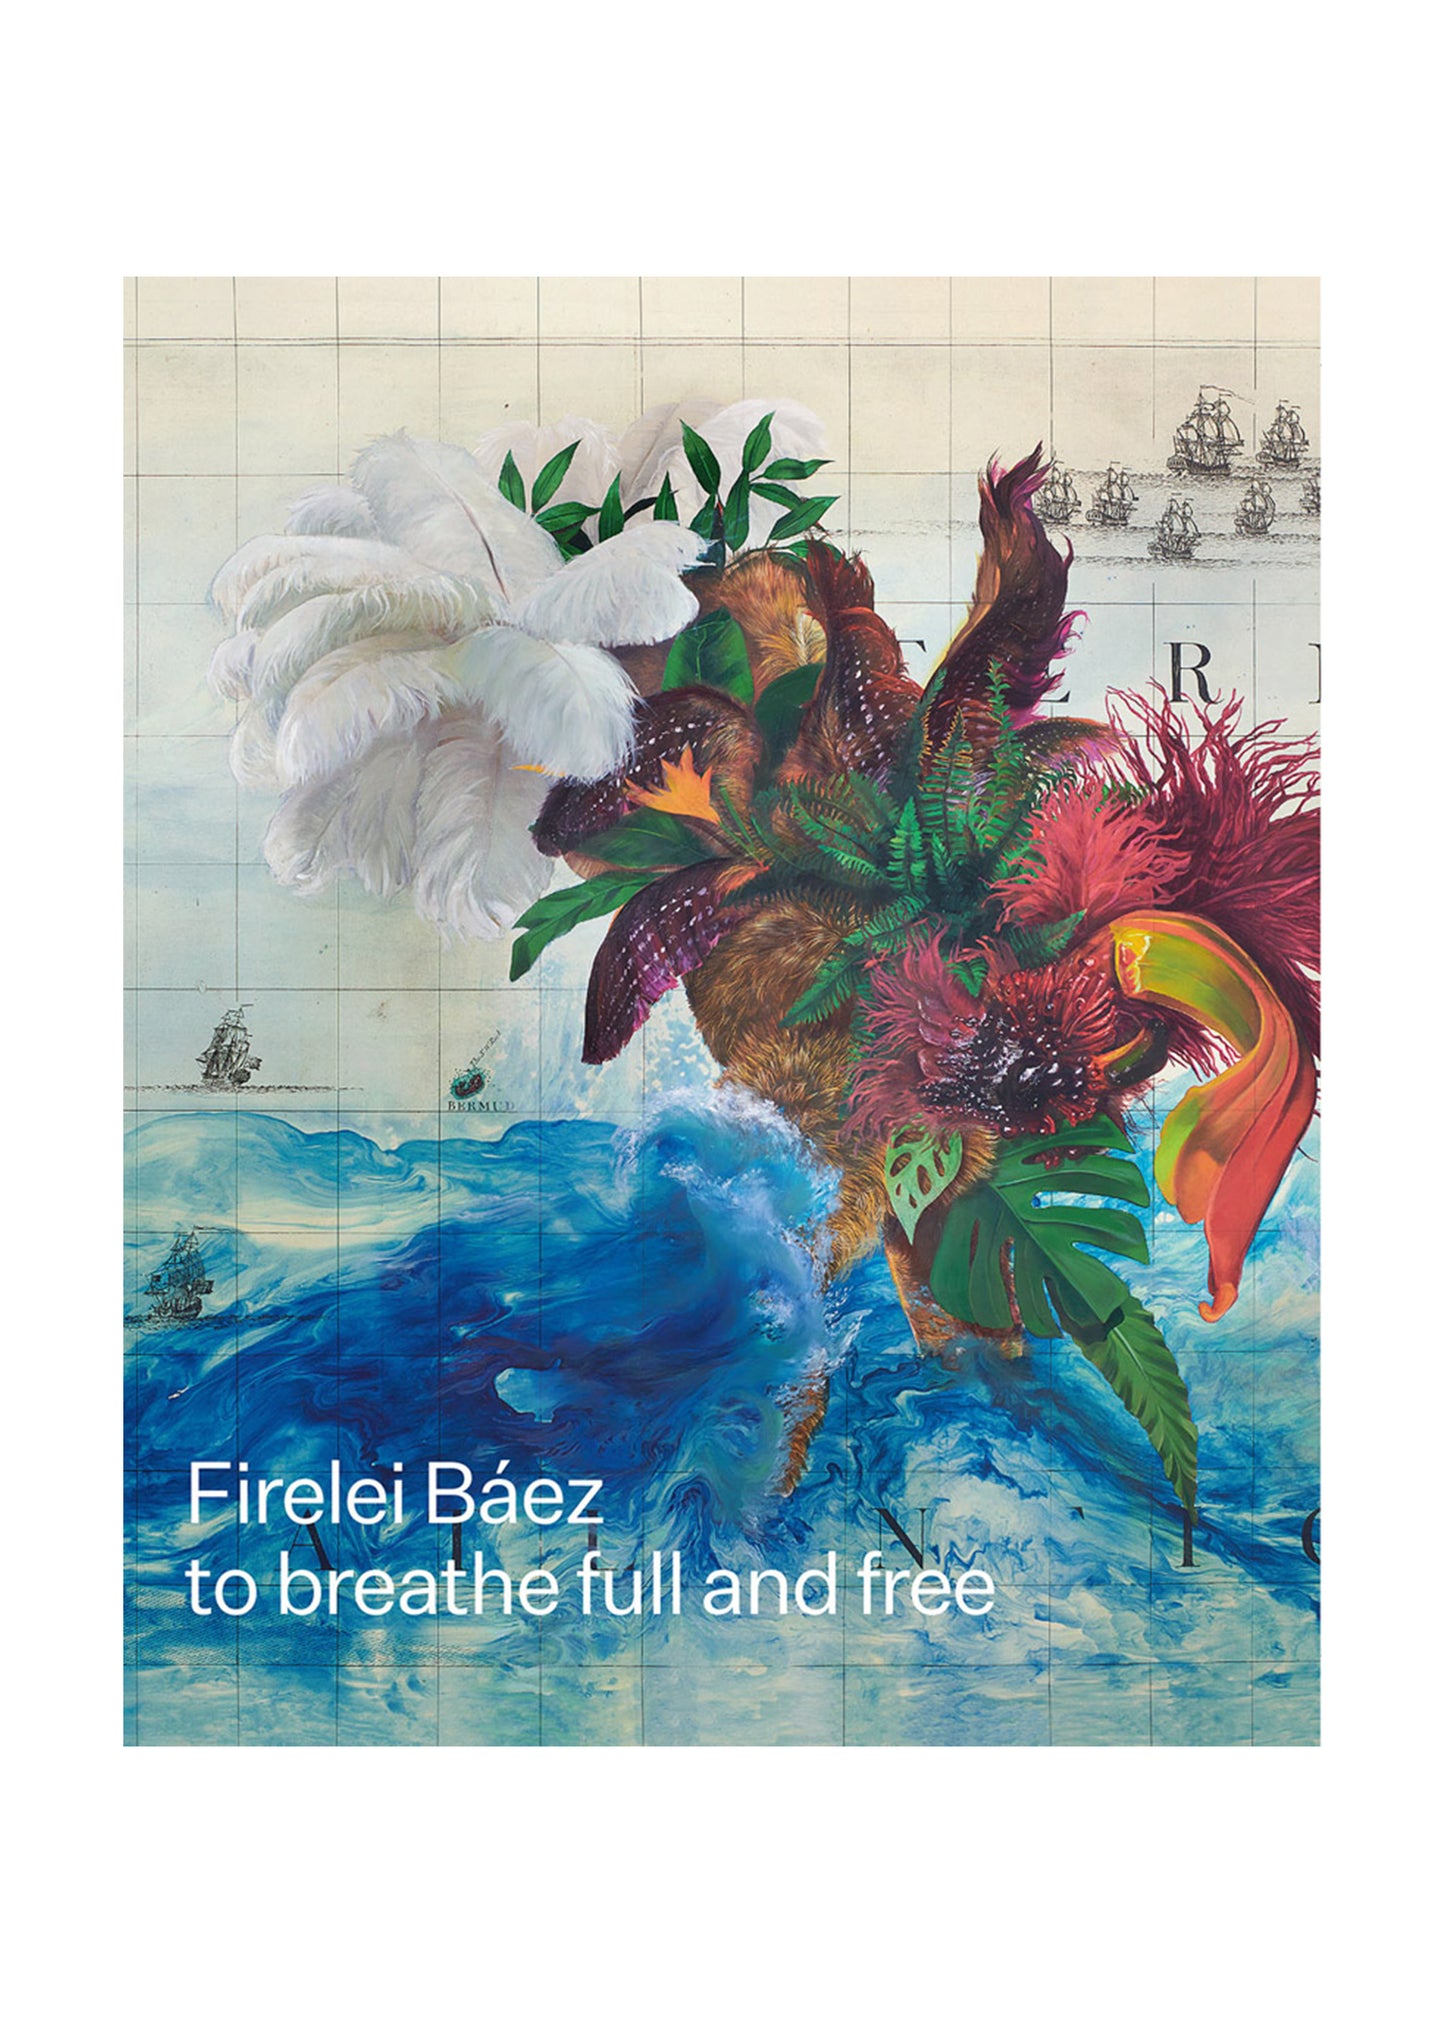 Firelei Baez: to breathe full and free